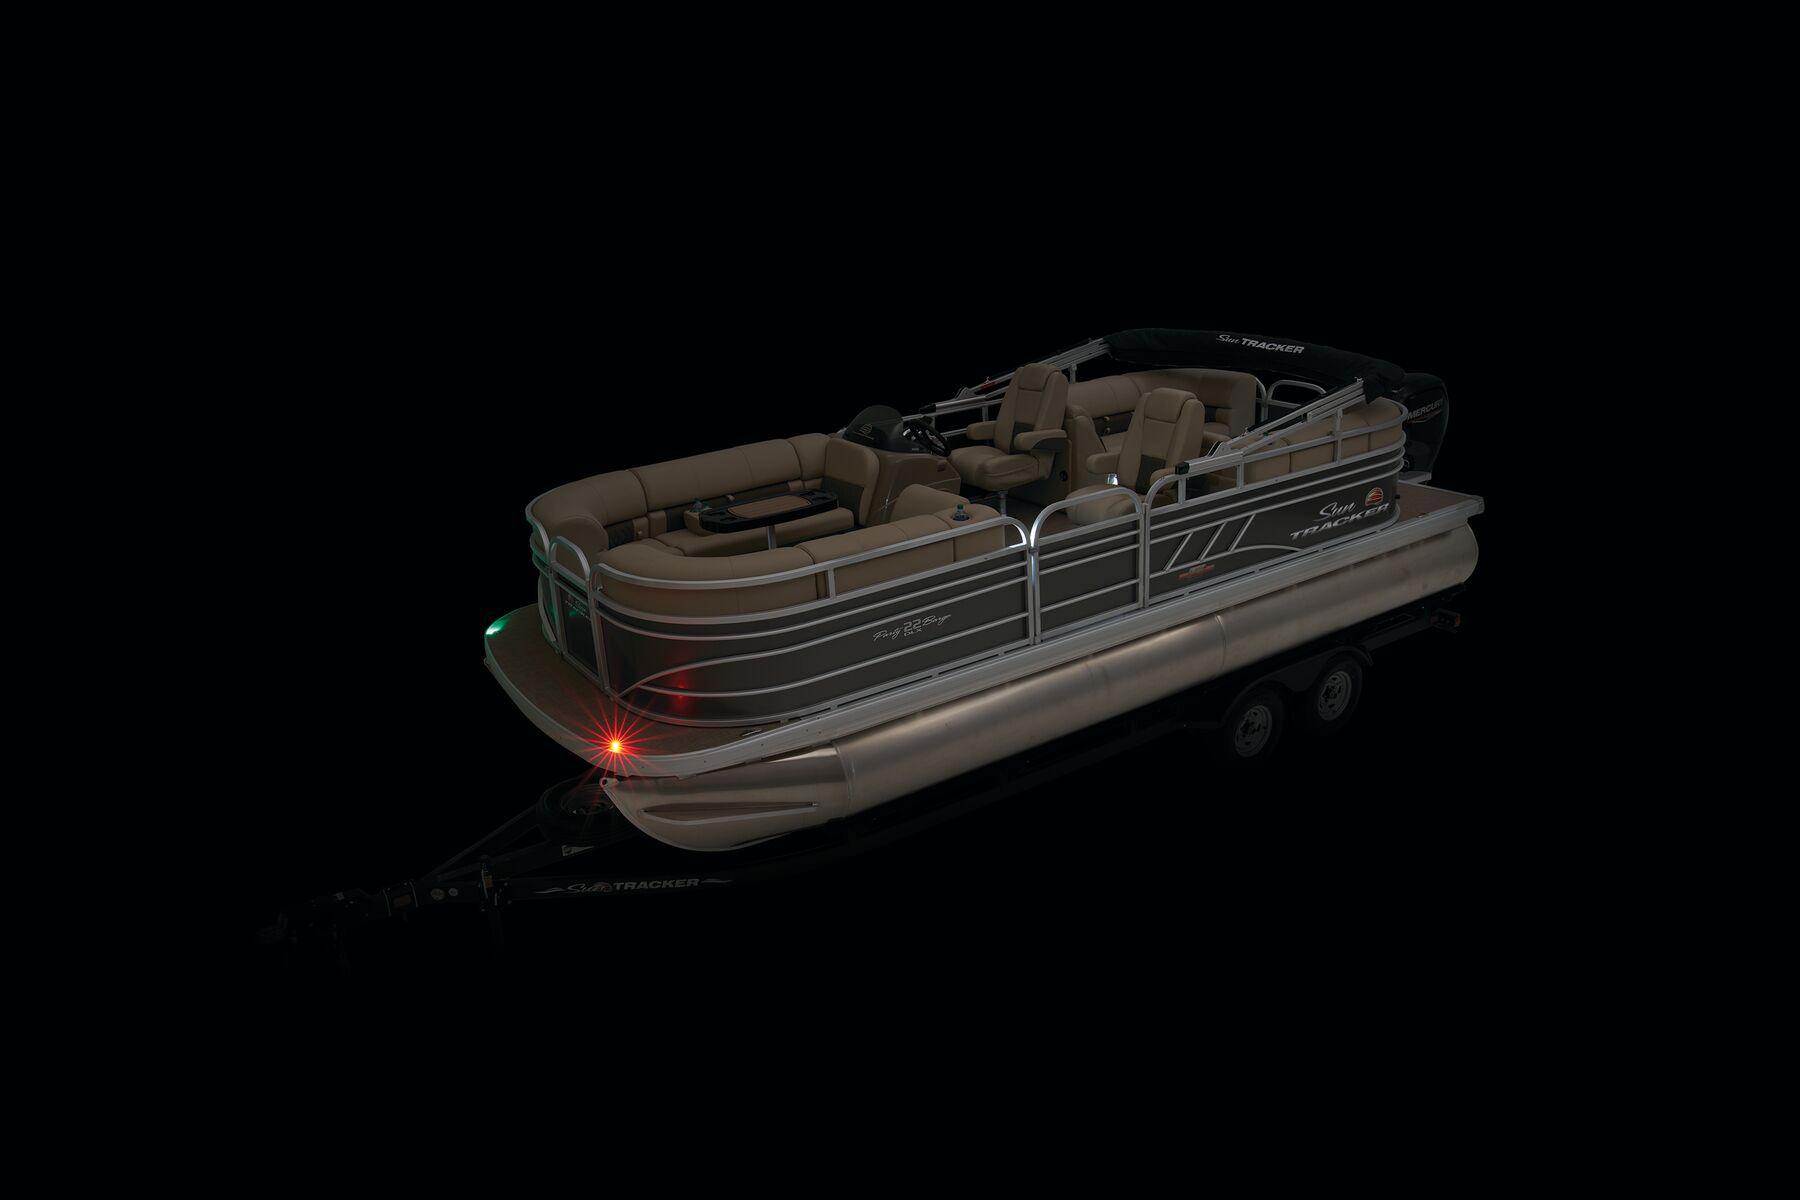 Sun Tracker Fishin' Barge 22 DLX Pontoon Covers – Seal Skin Covers